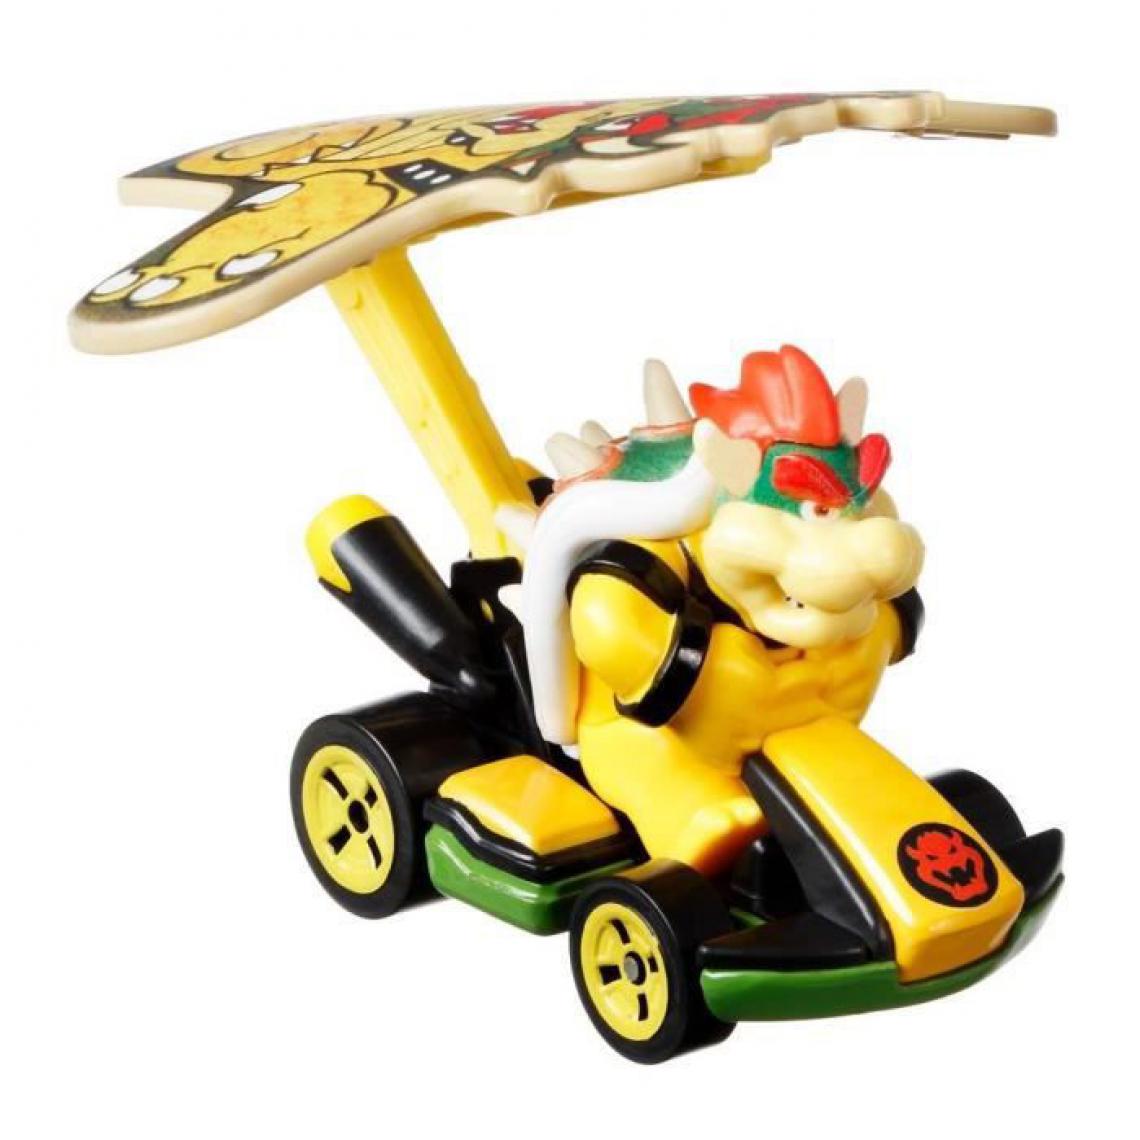 Hot Wheels - HOT WHEELS Mario Kart Aile Bowser Petite Voiture - Voitures